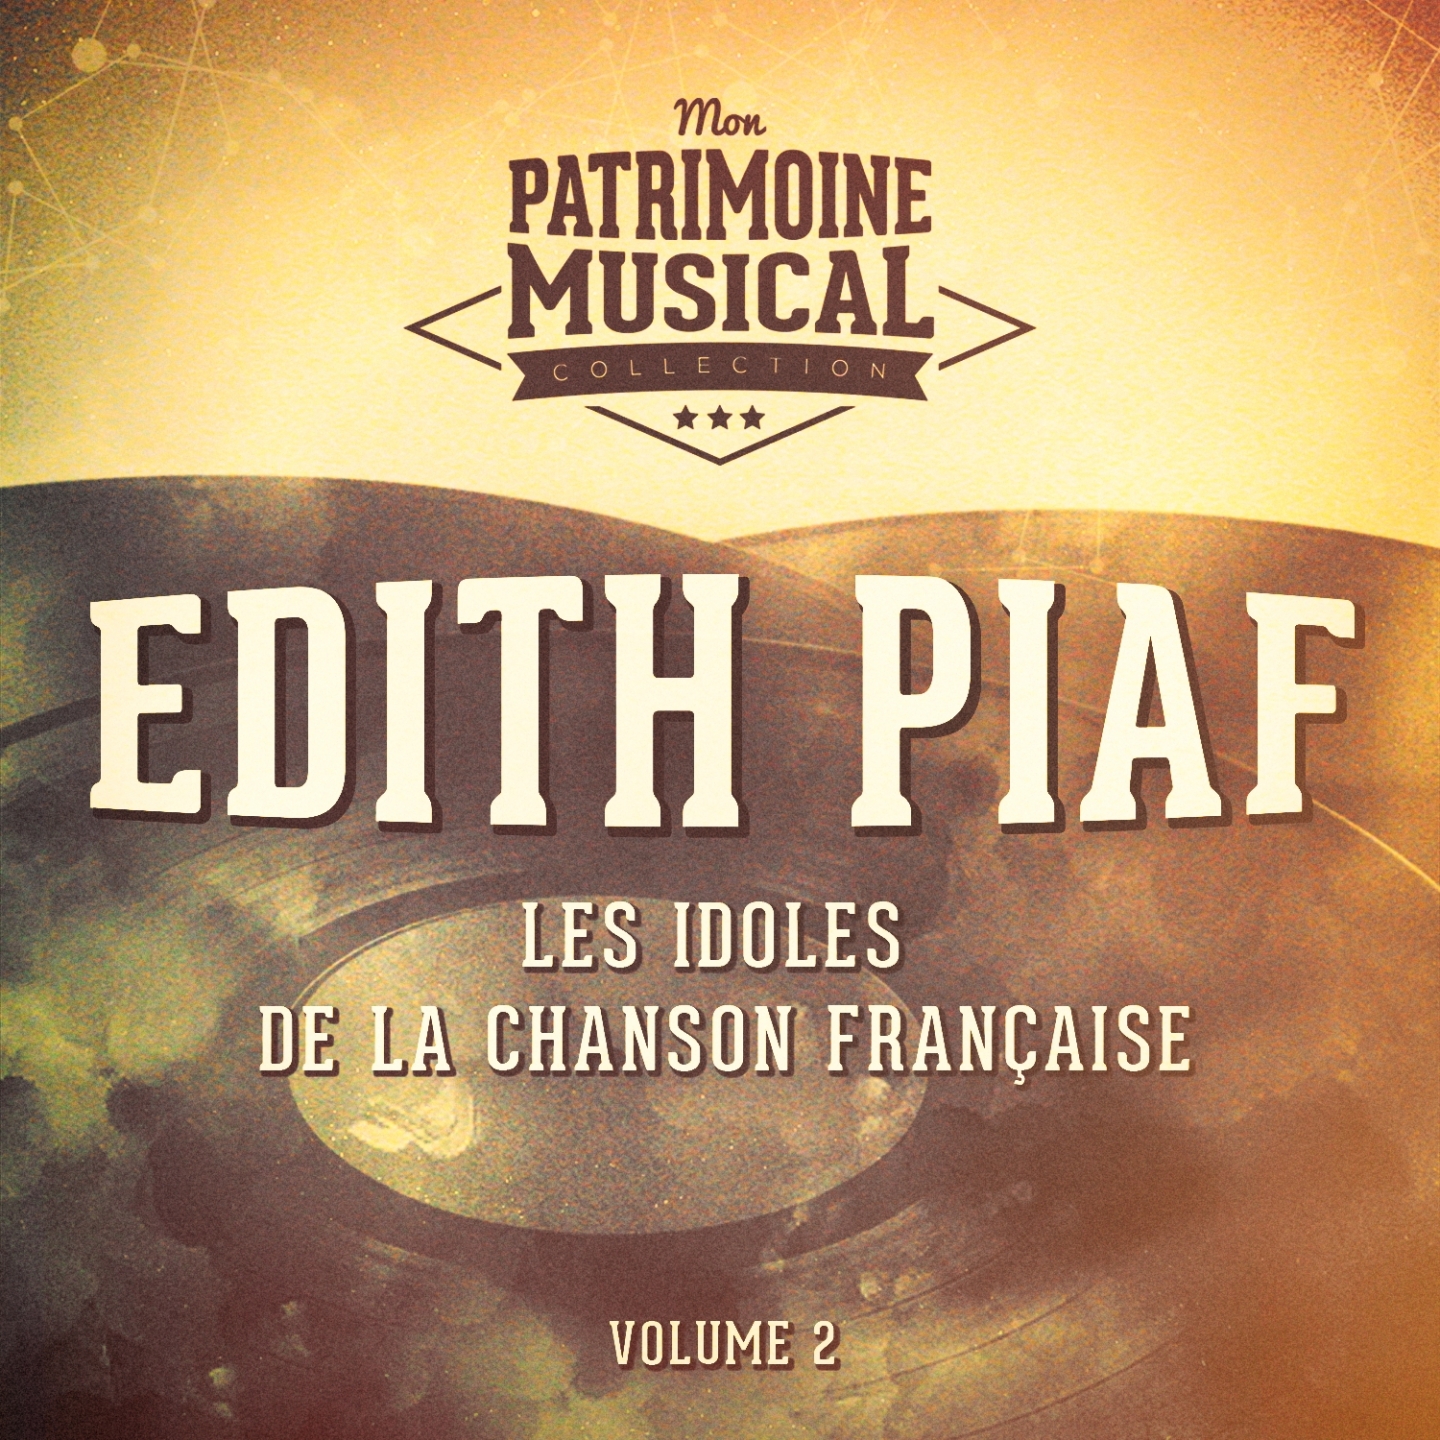 Les idoles de la chanson française : Edith Piaf, Vol. 2